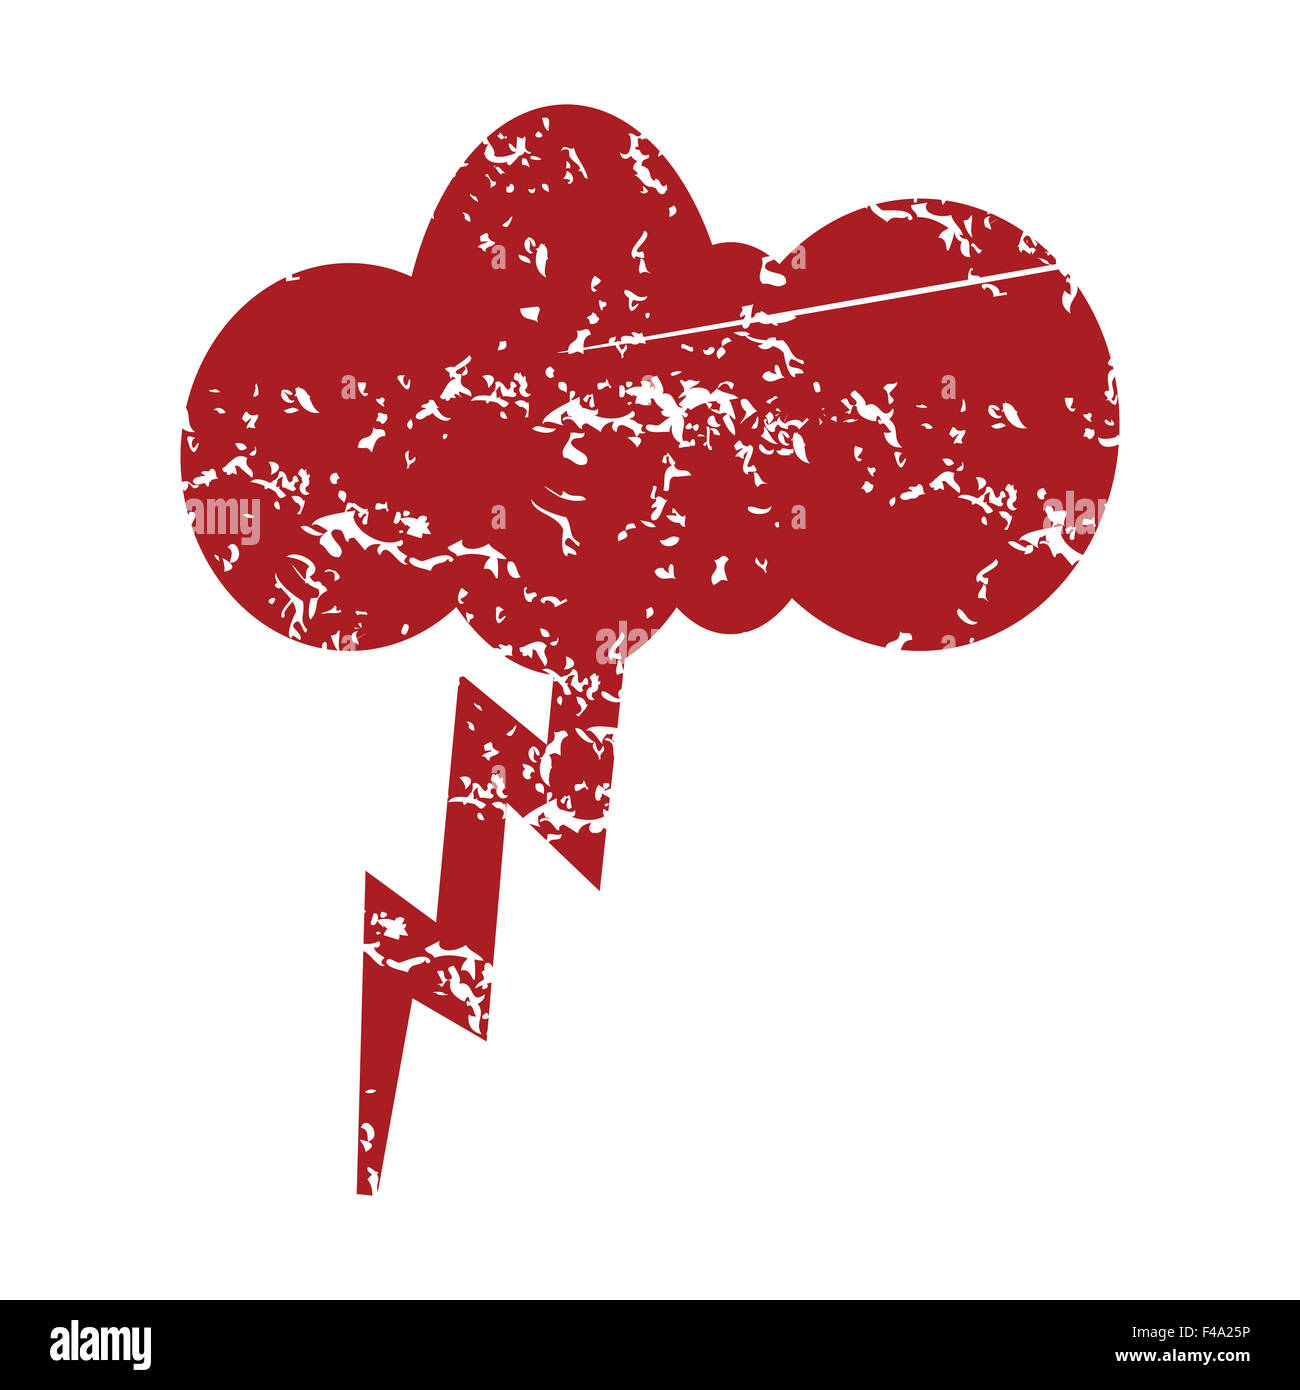 Red grunge storm logo Stock Photo